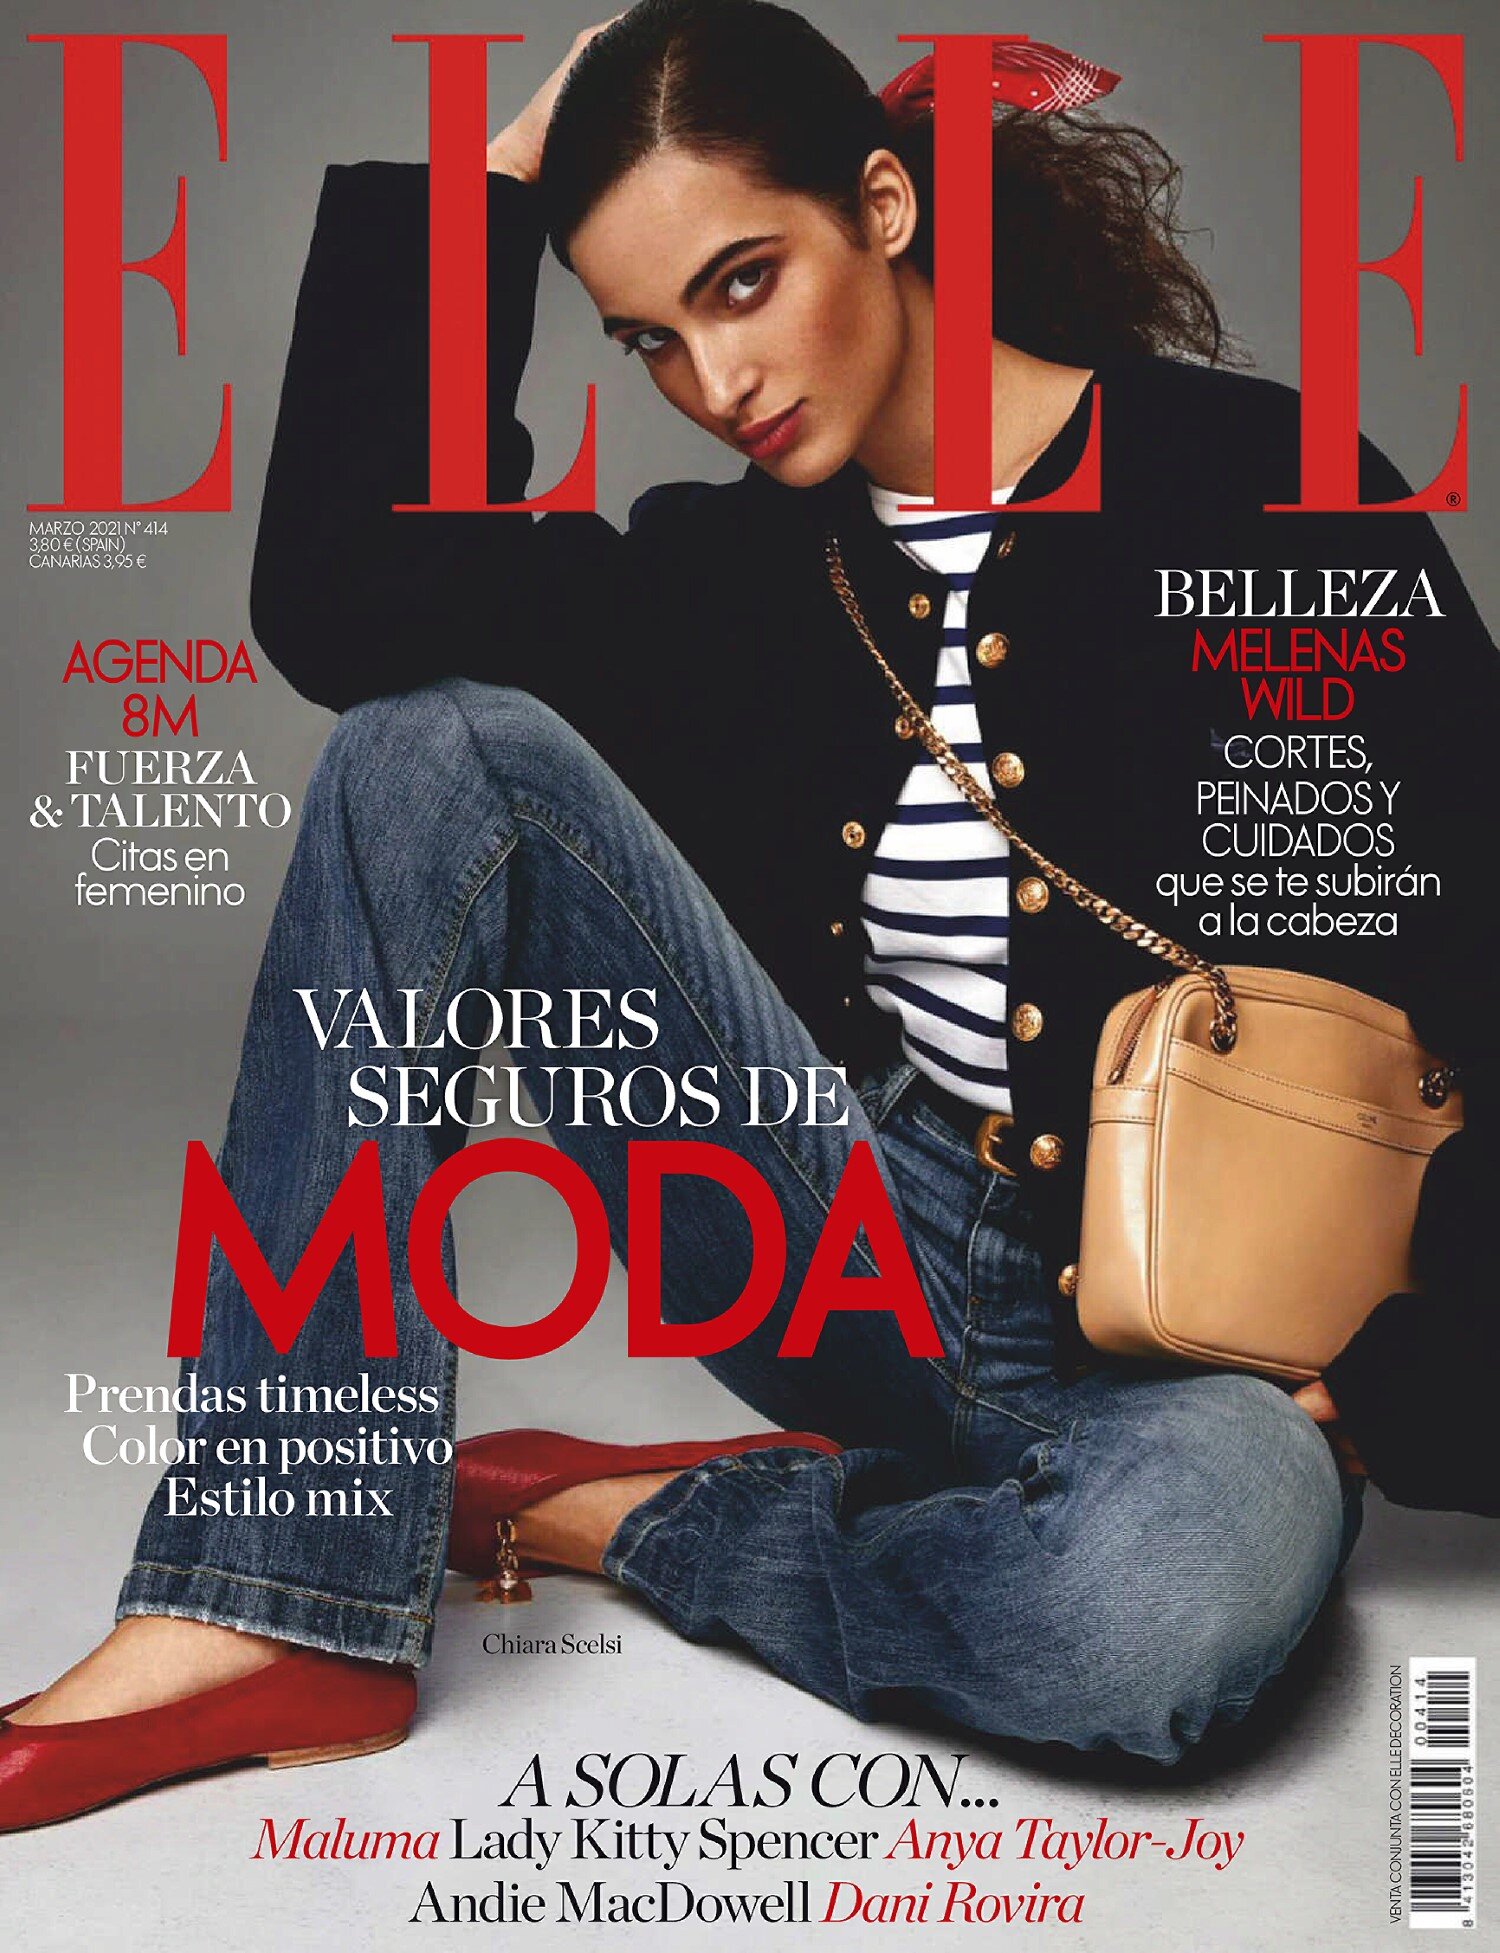 Chiara Scelsi covers Elle Spain March 2021 by Javier Lopez